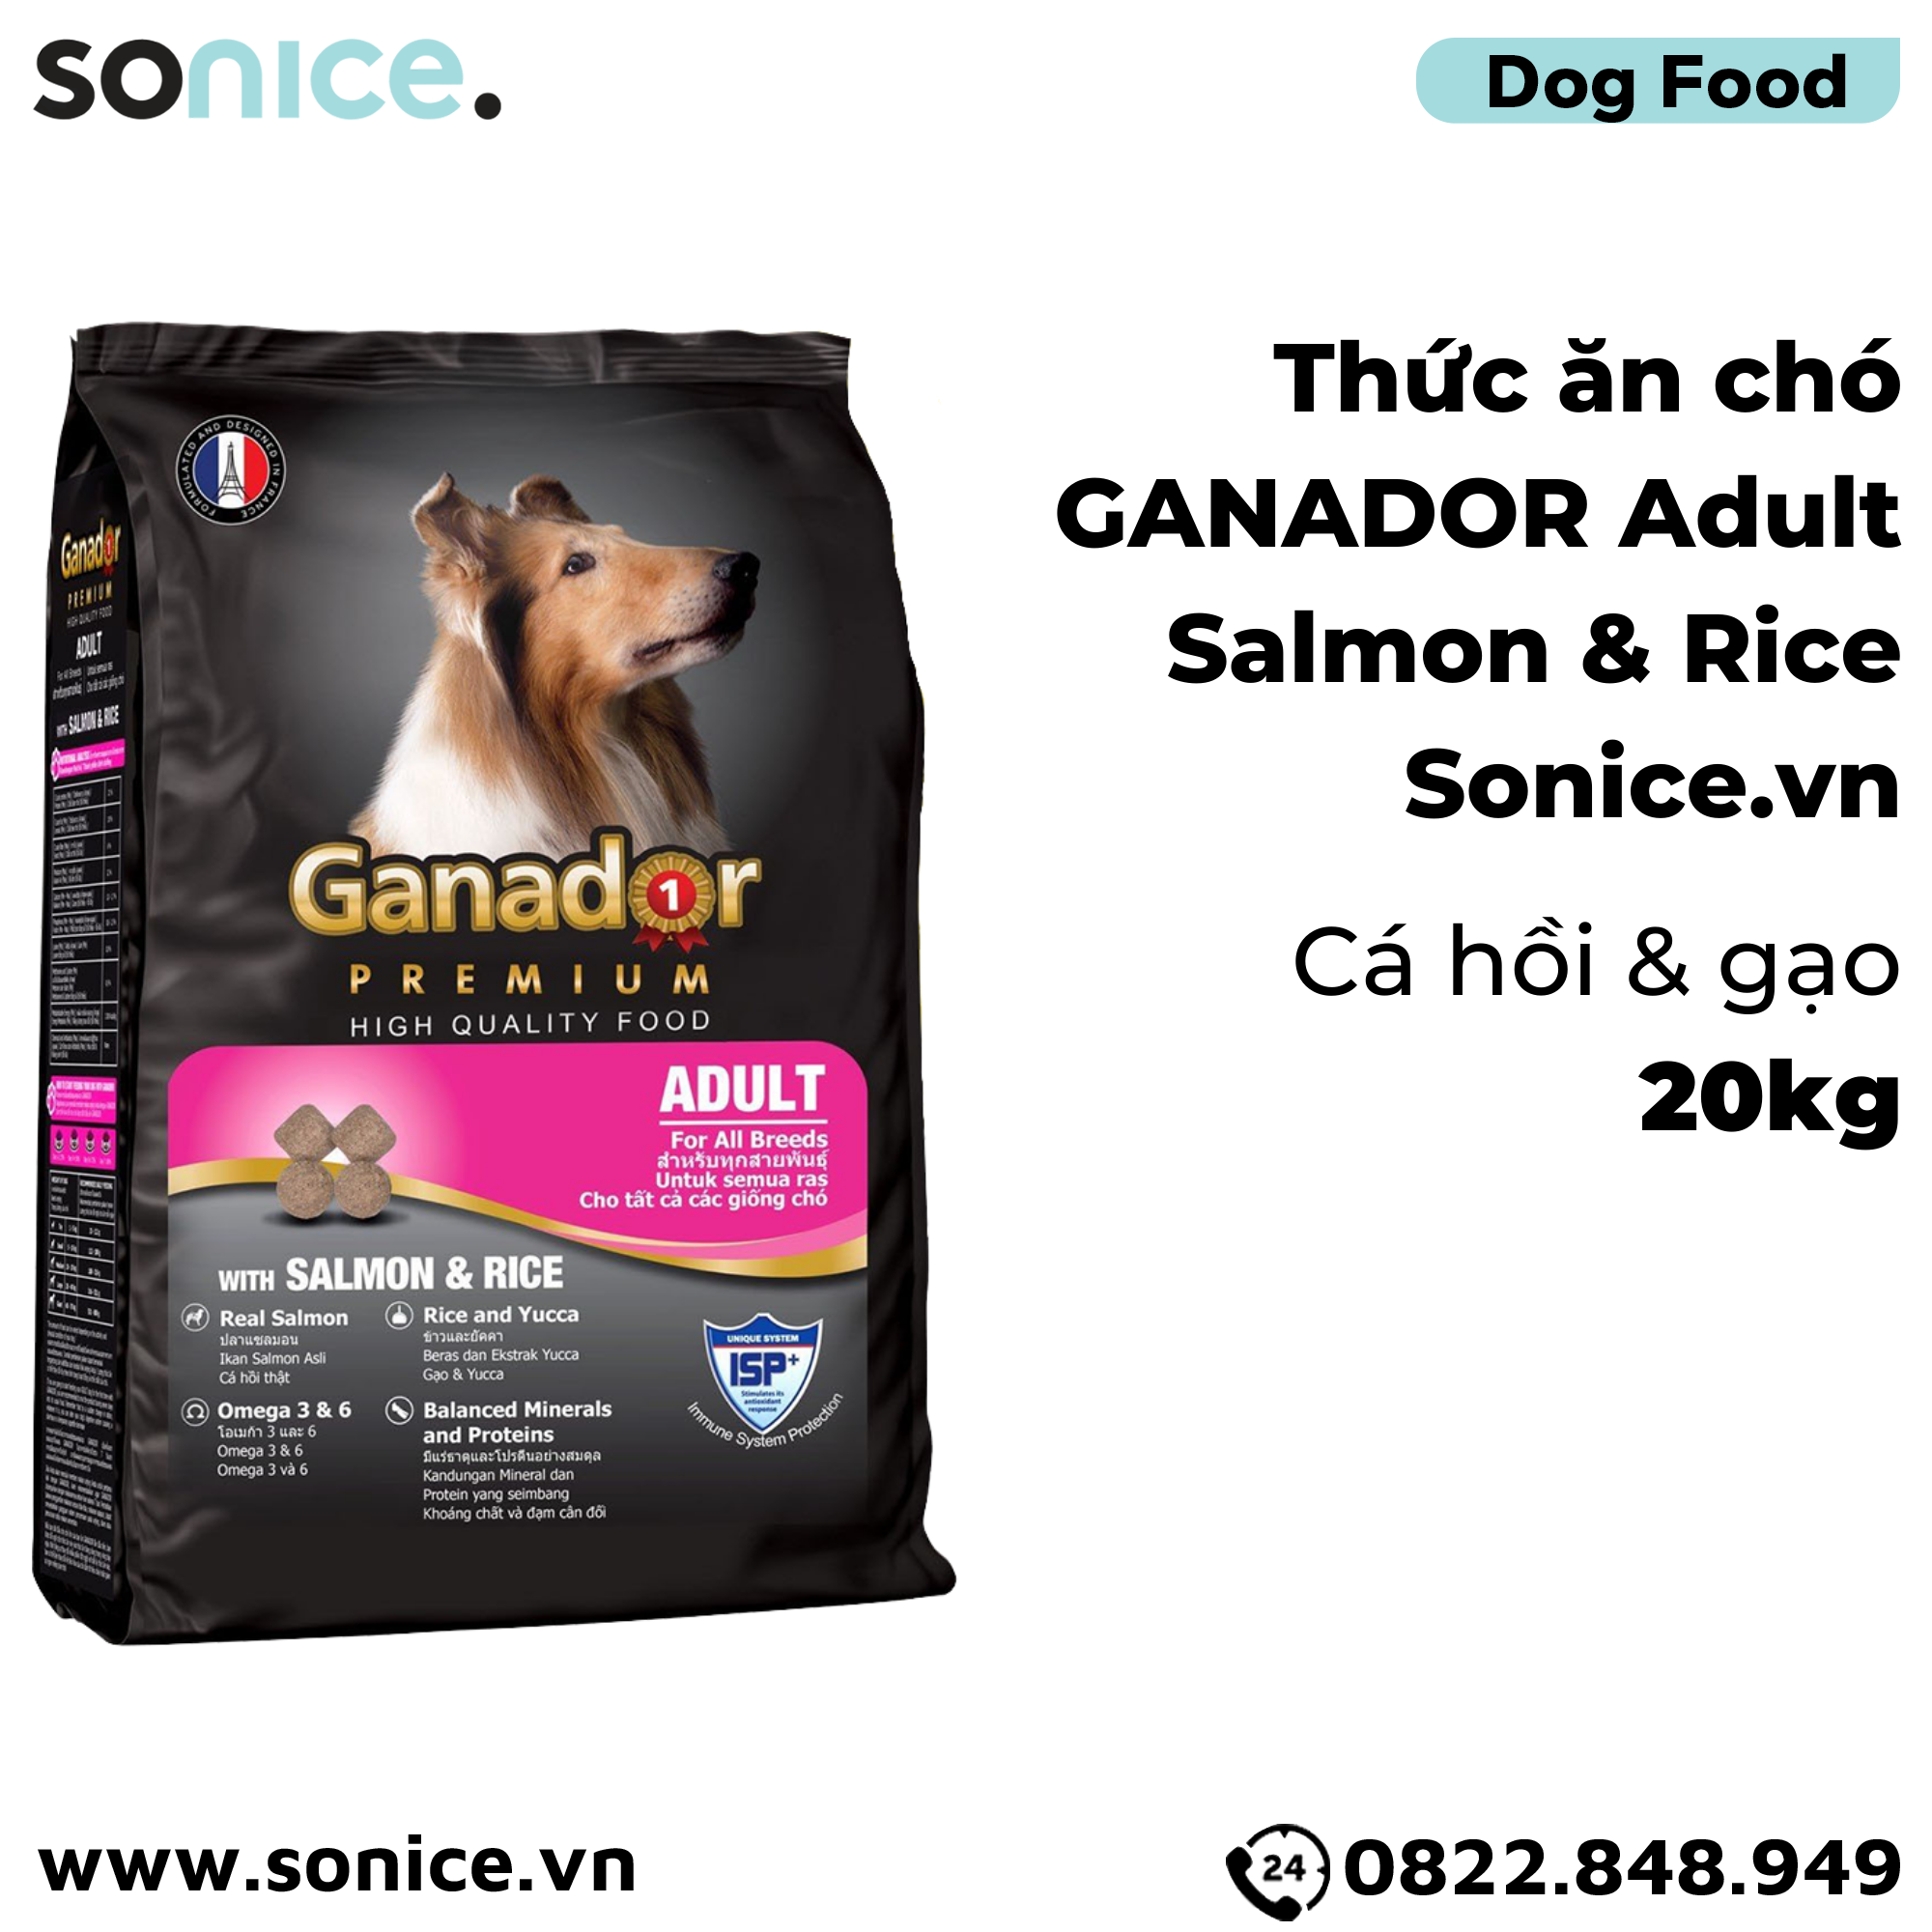  Thức ăn chó GANADOR Adult 20kg - Salmon & Rice SONICE. 